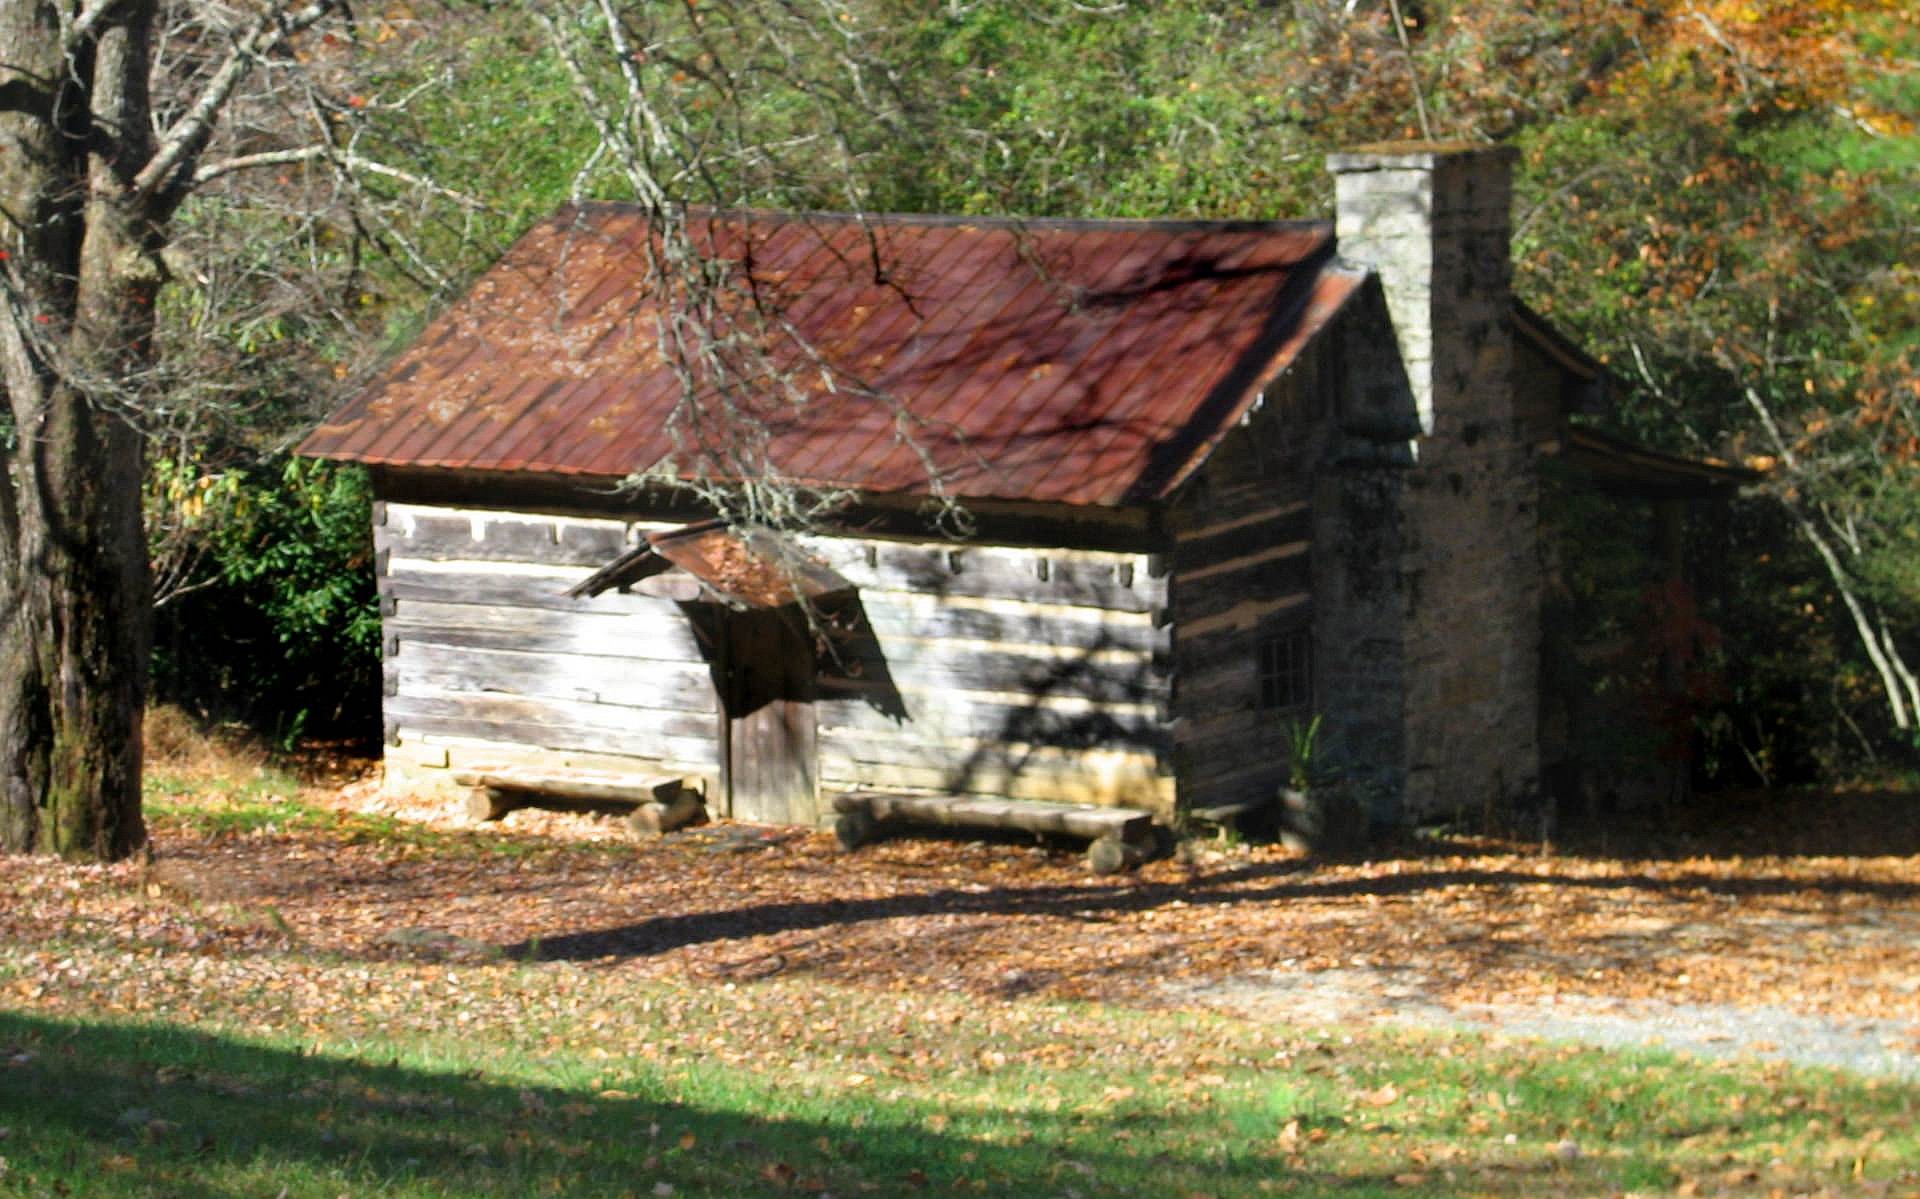 Rockbrook Cabin in the autumn